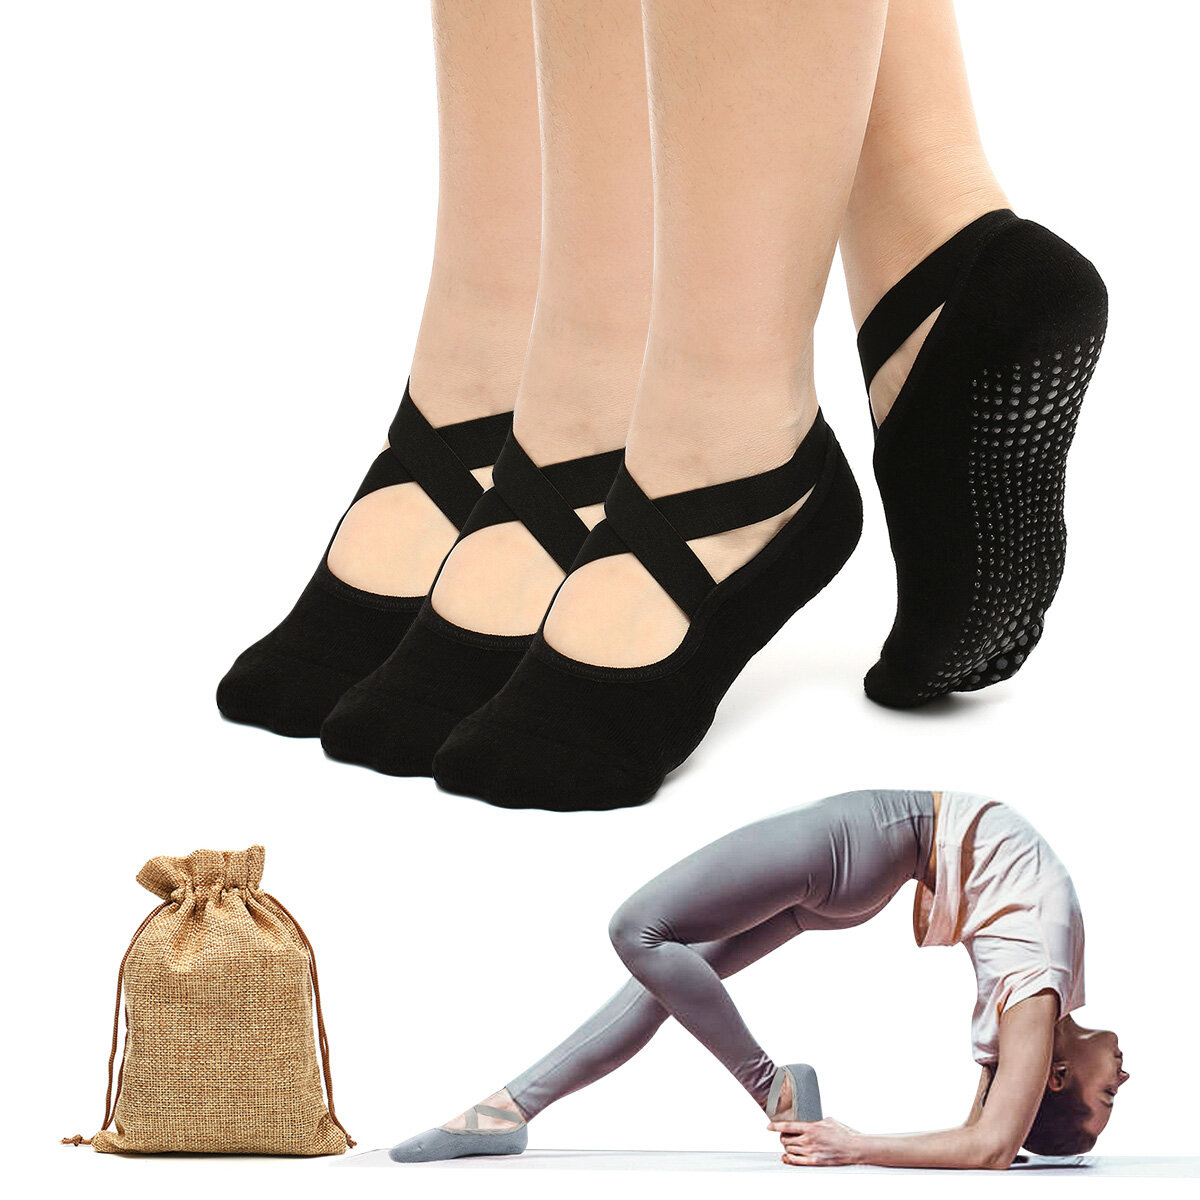 CHARMINER 2 ΖΕΥΓΑΡΙΑ/3 ΖΕΥΓΑΡΙΑ Κάλτσες Yoga με διασταυρούμενες λωρίδες, αντιολισθητικές και αναπνεύσιμες, κατάλληλες για μπαλέτο, πιλάτες, yoga για γυναίκες